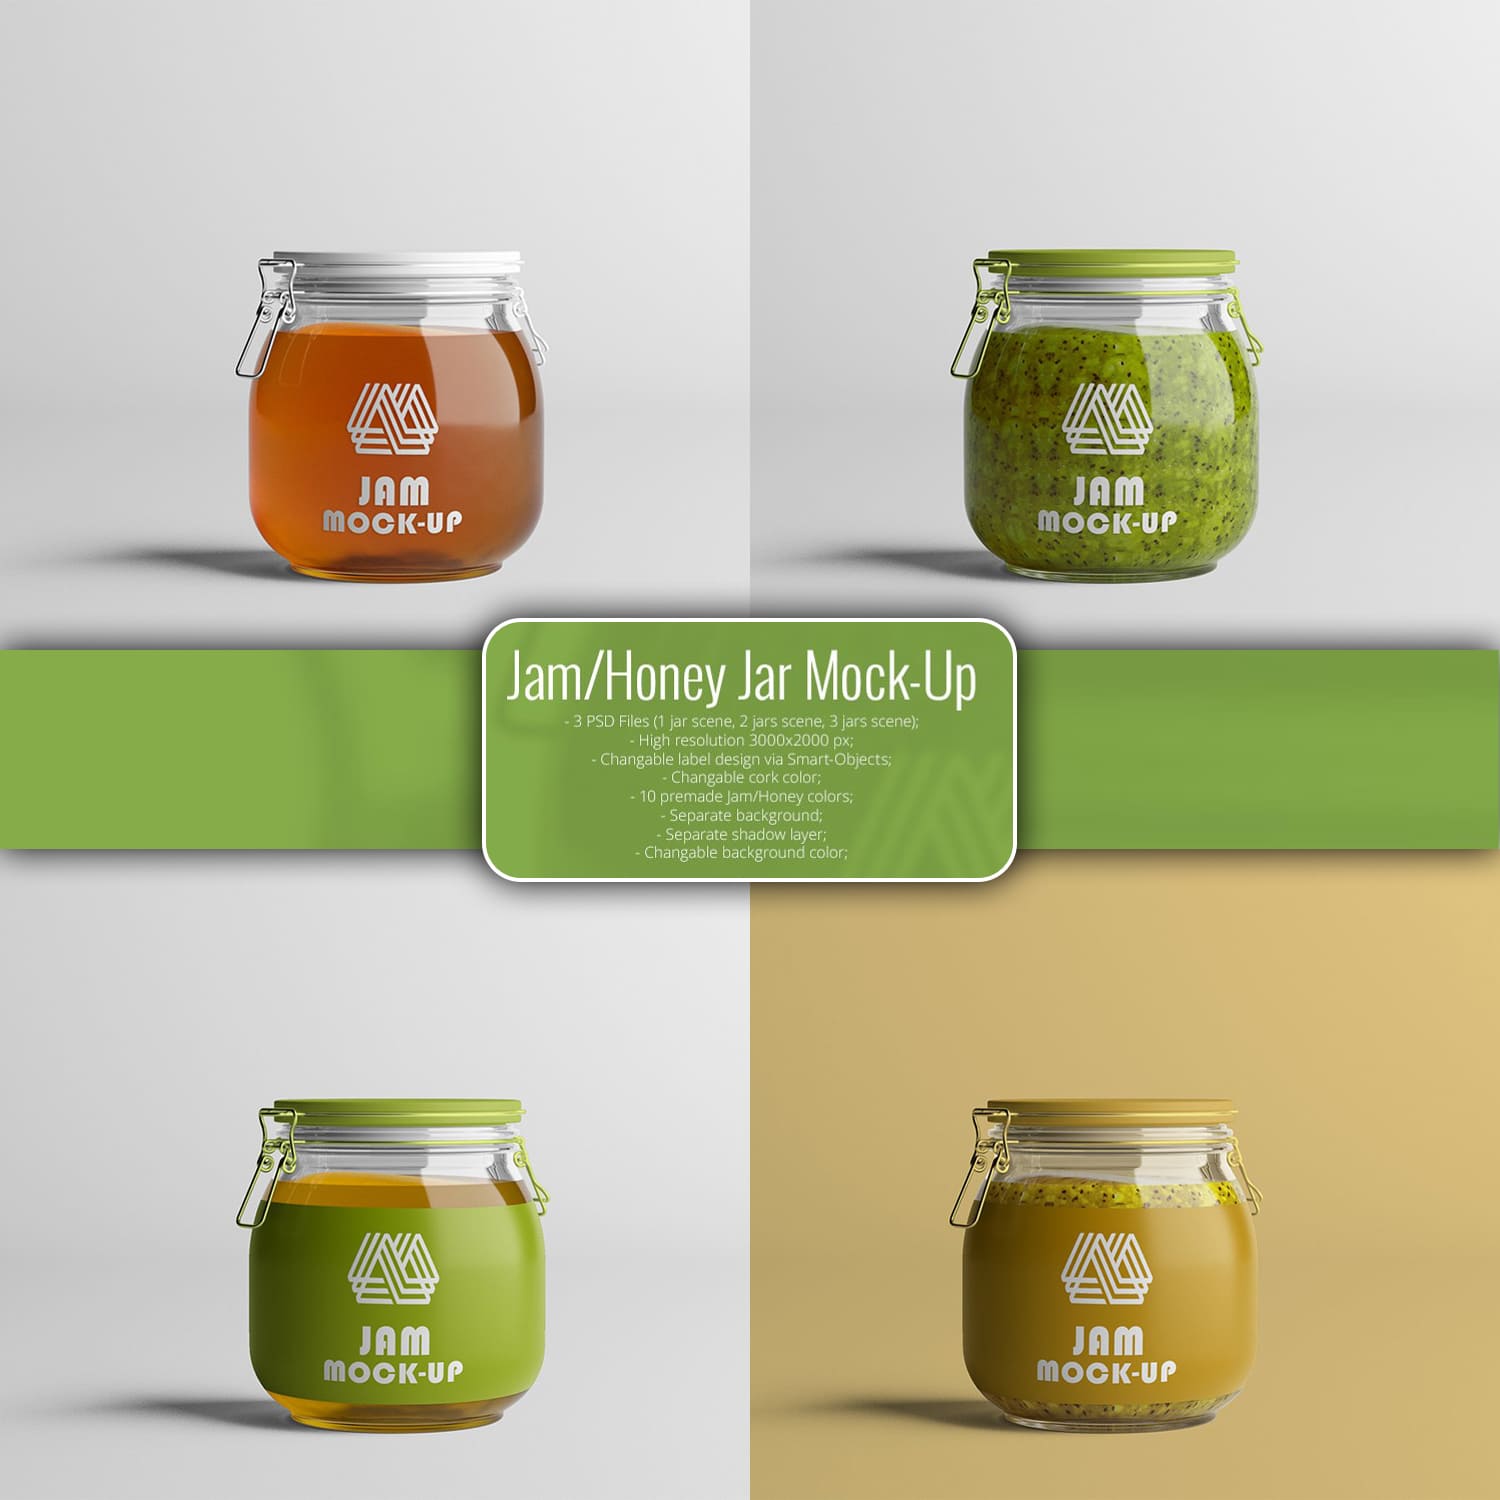 Jam/Honey Jar Mock-Up cover.